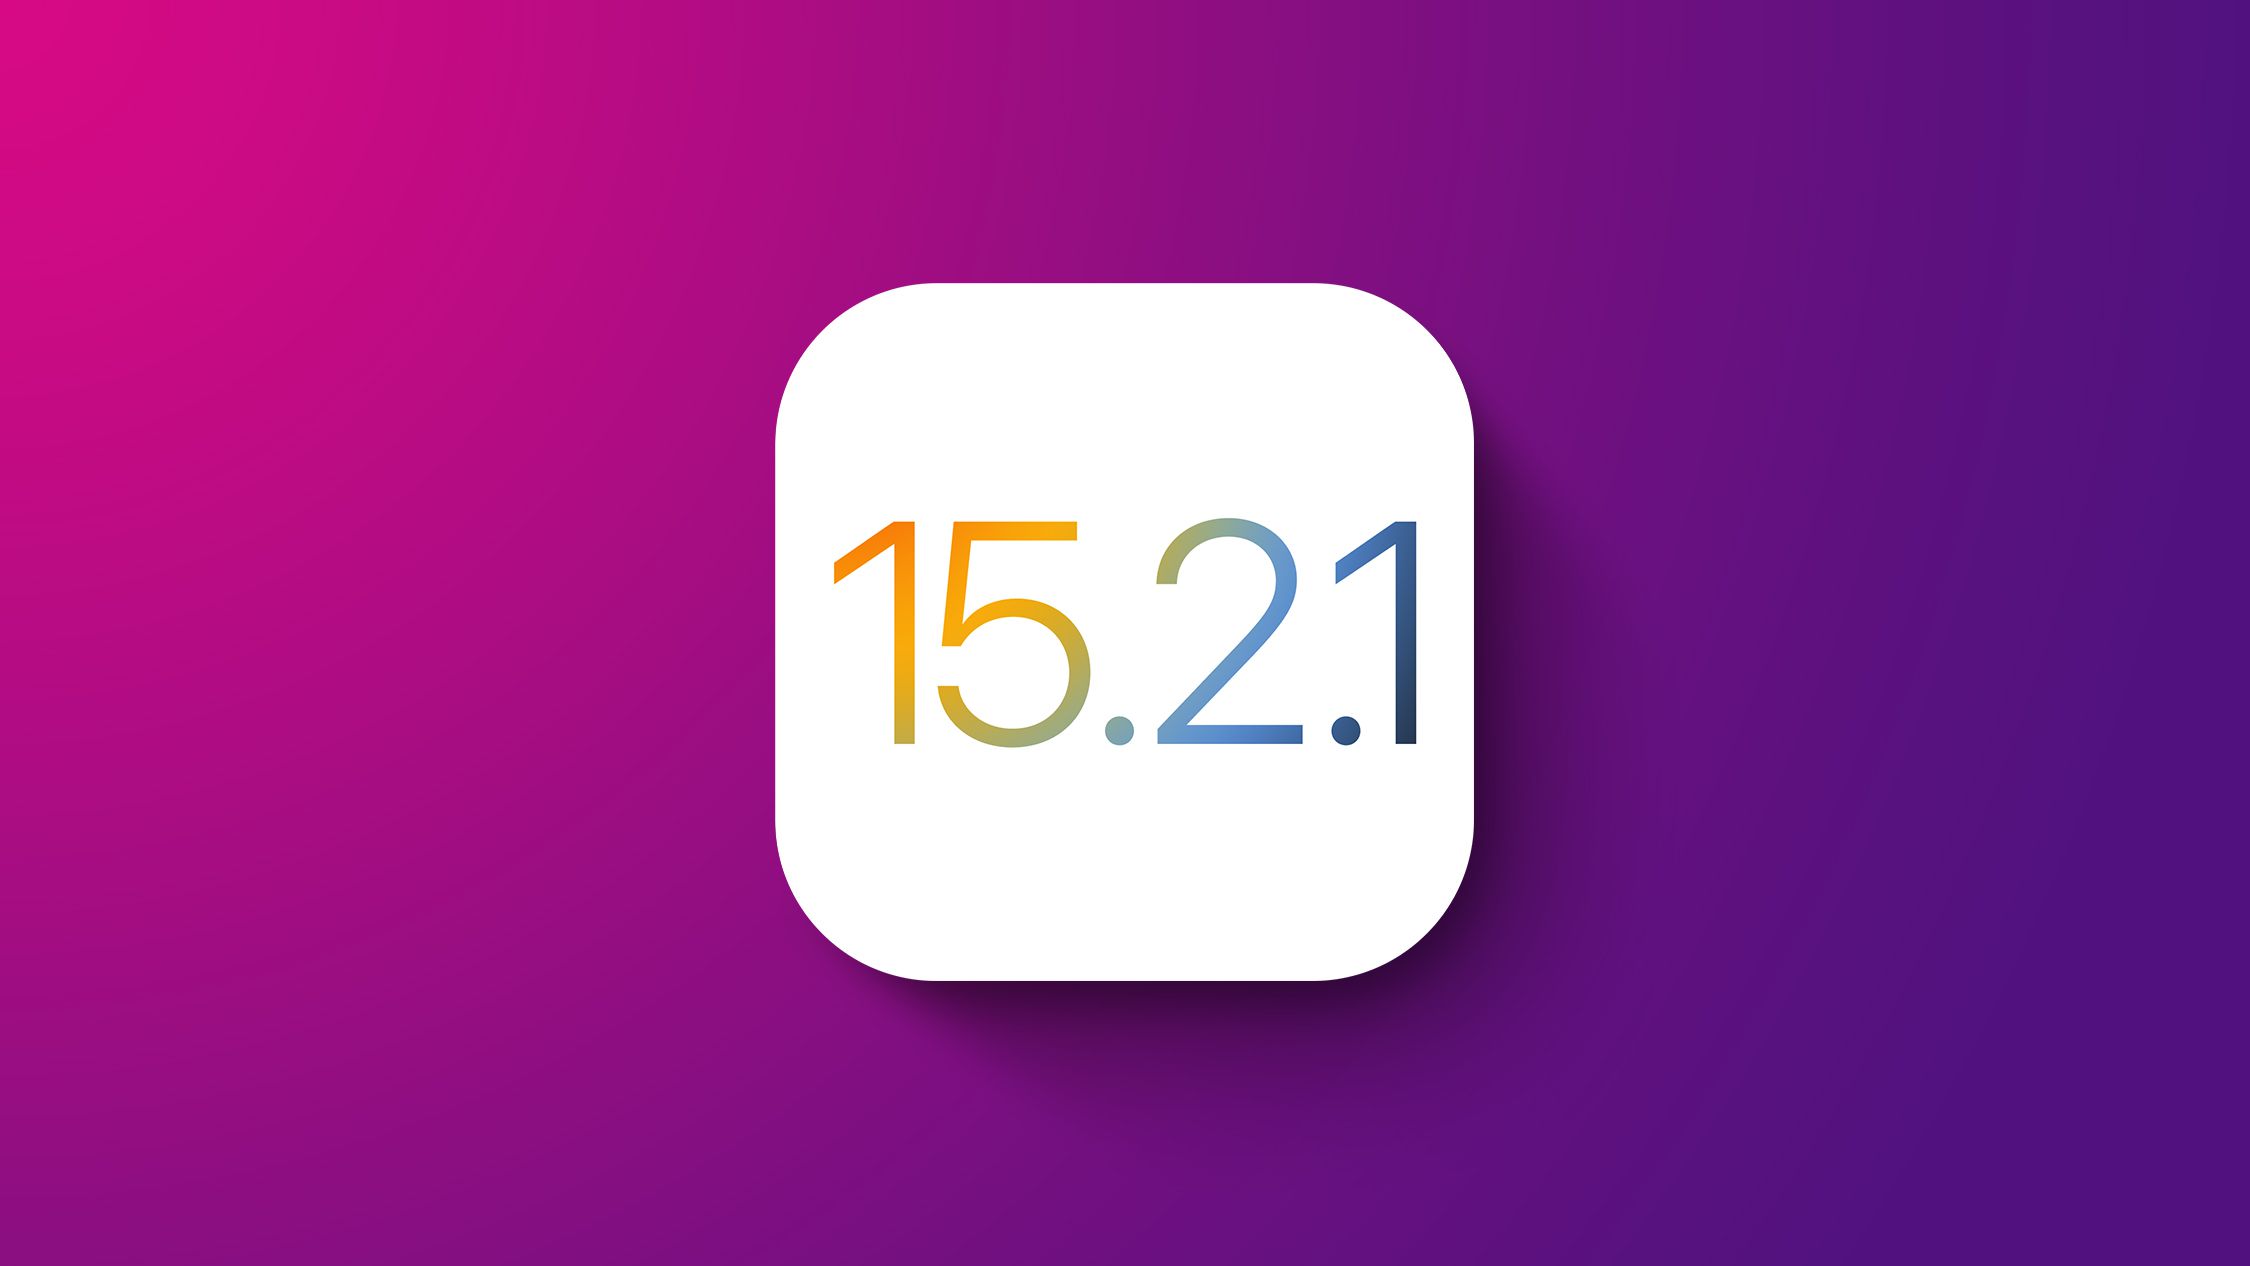 Apple Releases Minor iOS 15.2.1 and iPadOS 15.2.1 Updates - MacRumors